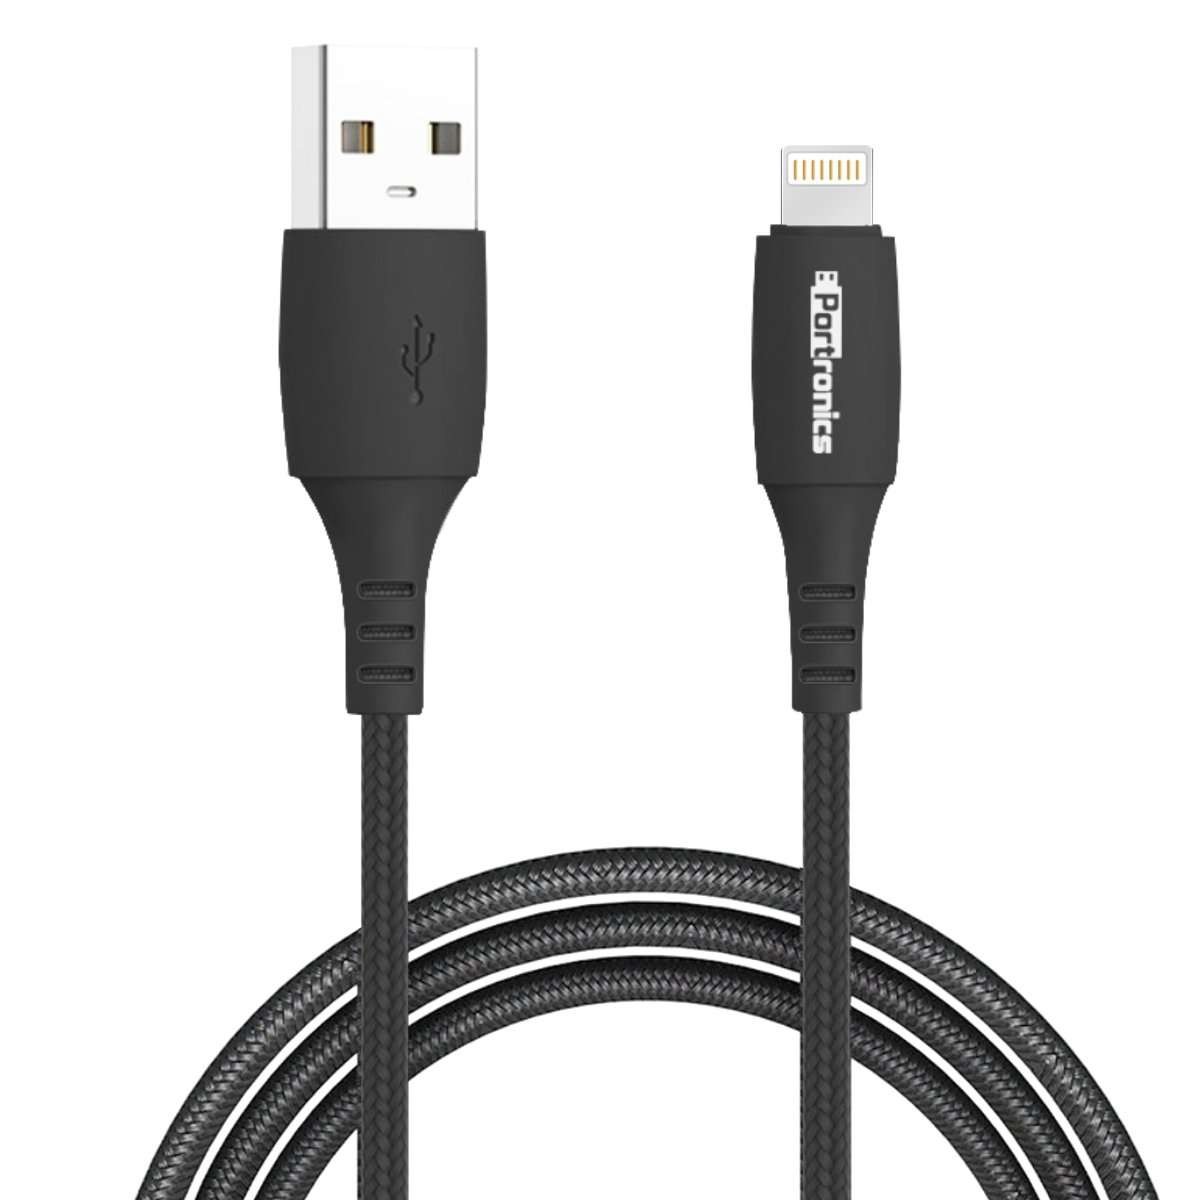 Portronics Konnect A POR-1171 1M 8 Pin USB Cable with PVC Heads (Black)